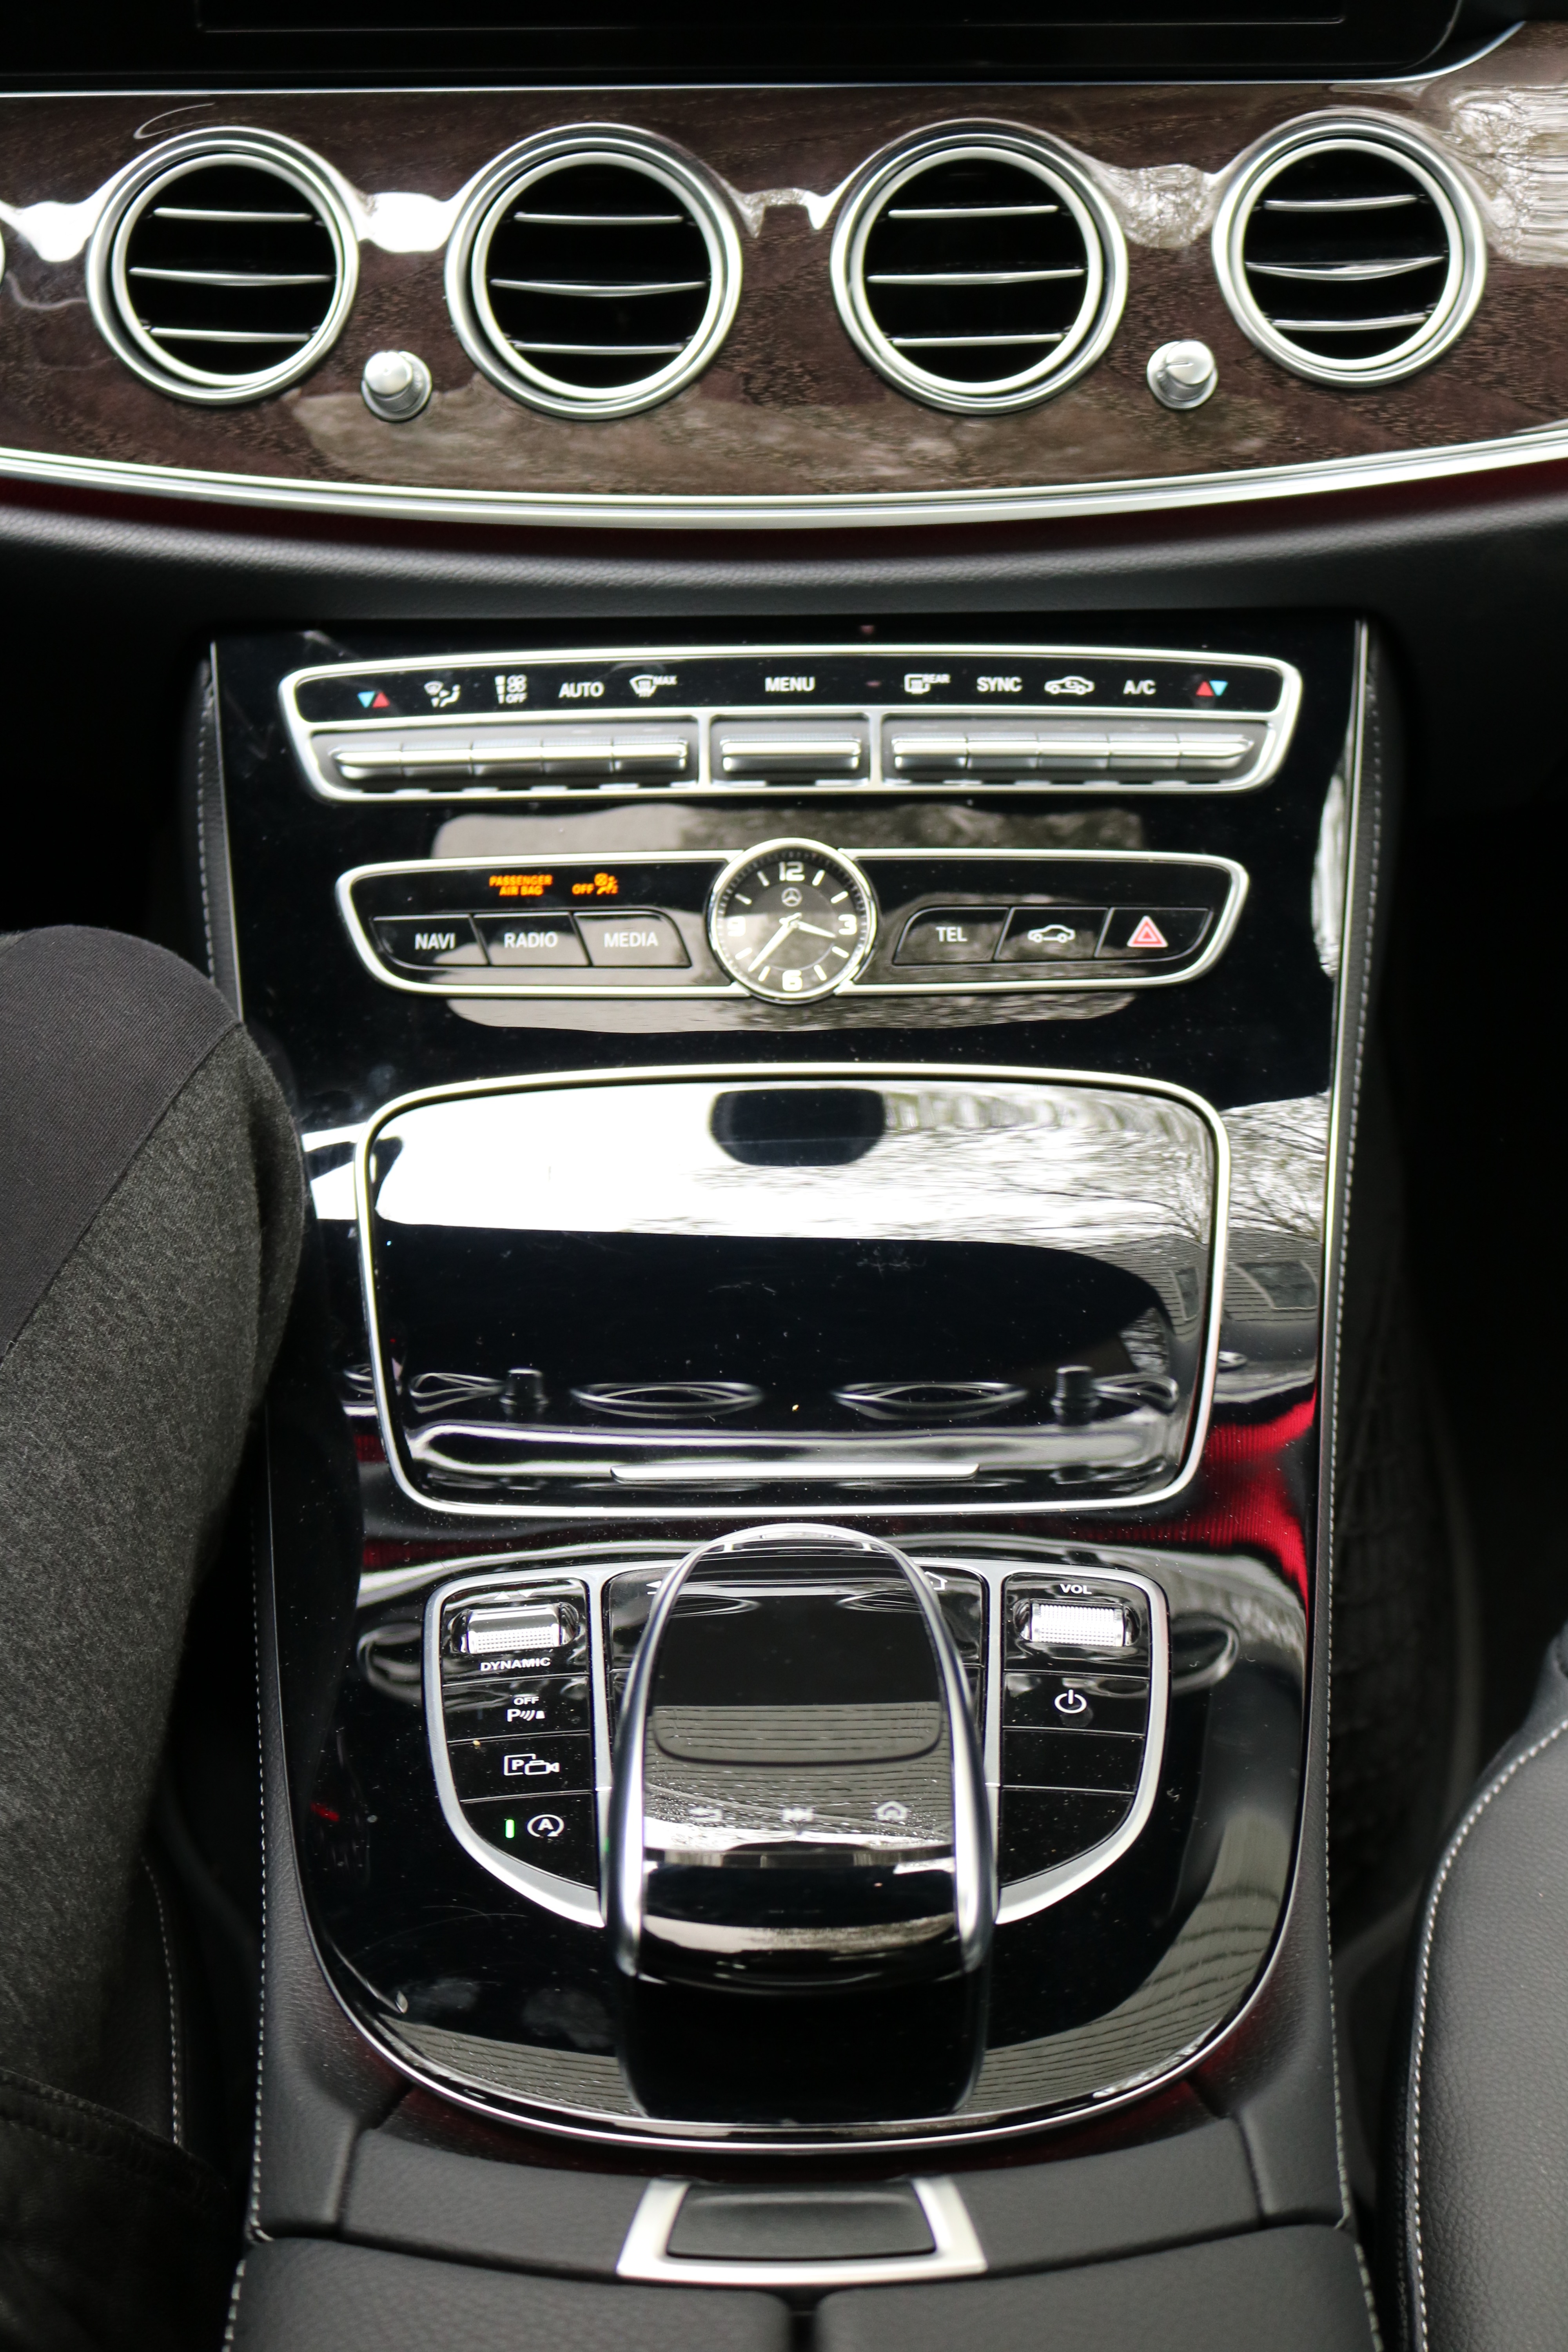 Mercedes Benz E-300 Interior Center Console Dashboard Details - The Luxury Lifestyle Magazine